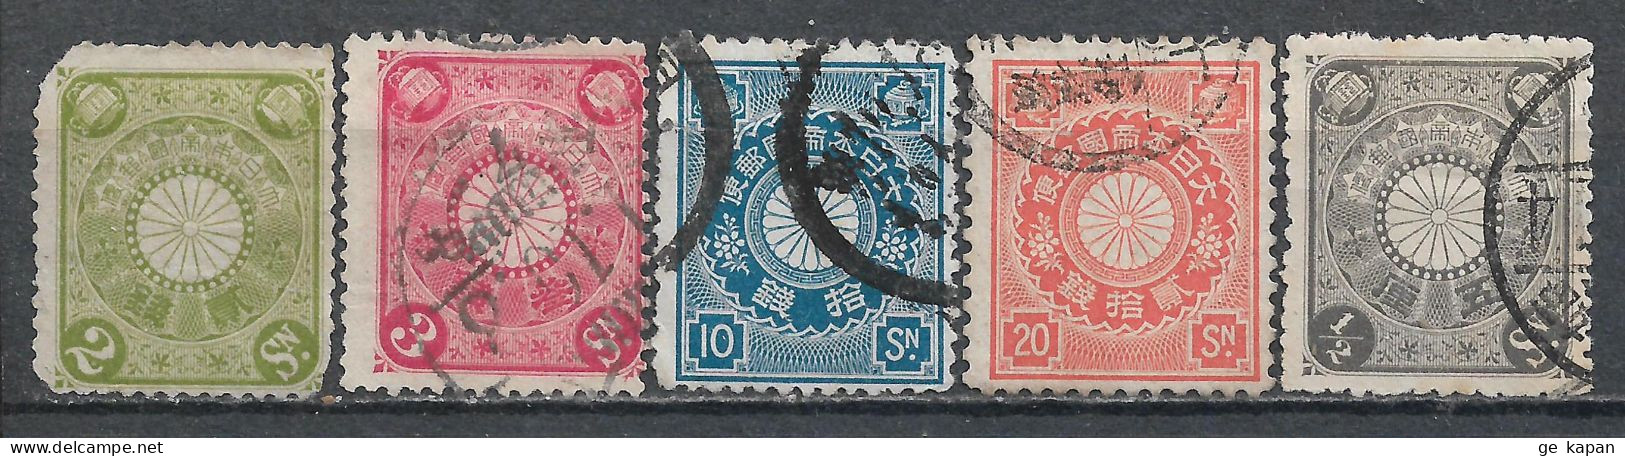 1899-1906 JAPAN Set Of 8 Used Stamps (Michel # 76-78,80,82,84,90,95) CV €4.20 - Gebraucht